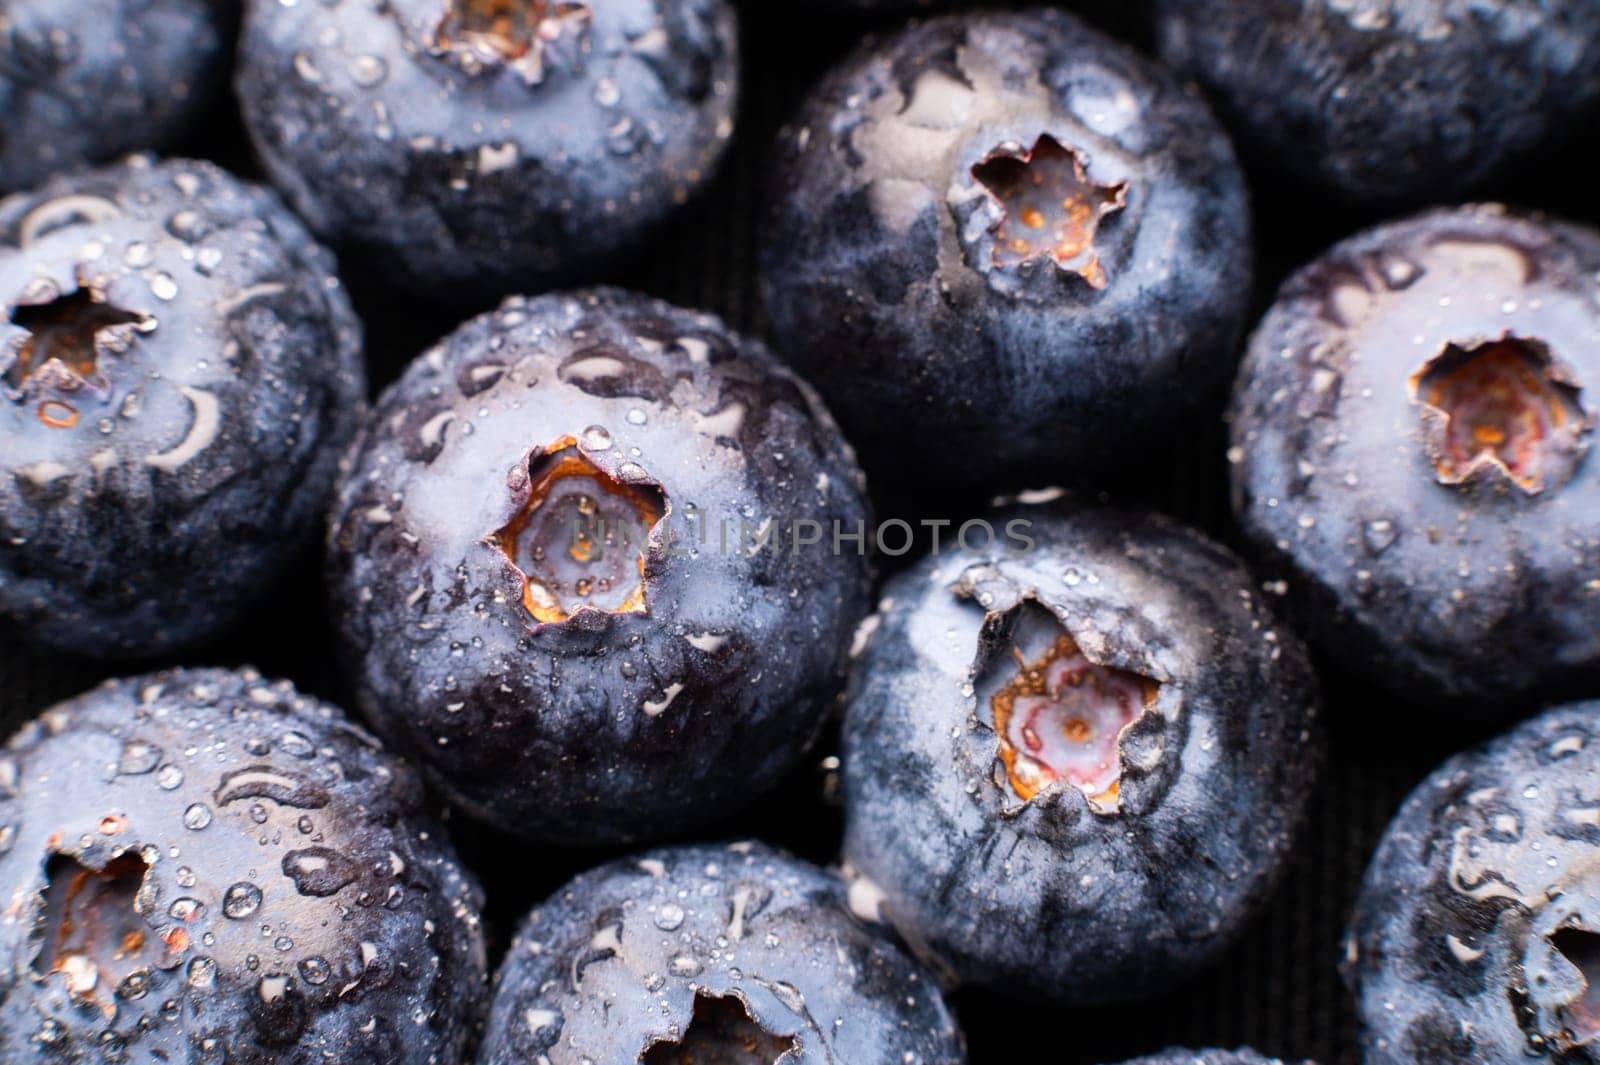 Wet fresh Blueberry background. Studio macro shot by yanik88